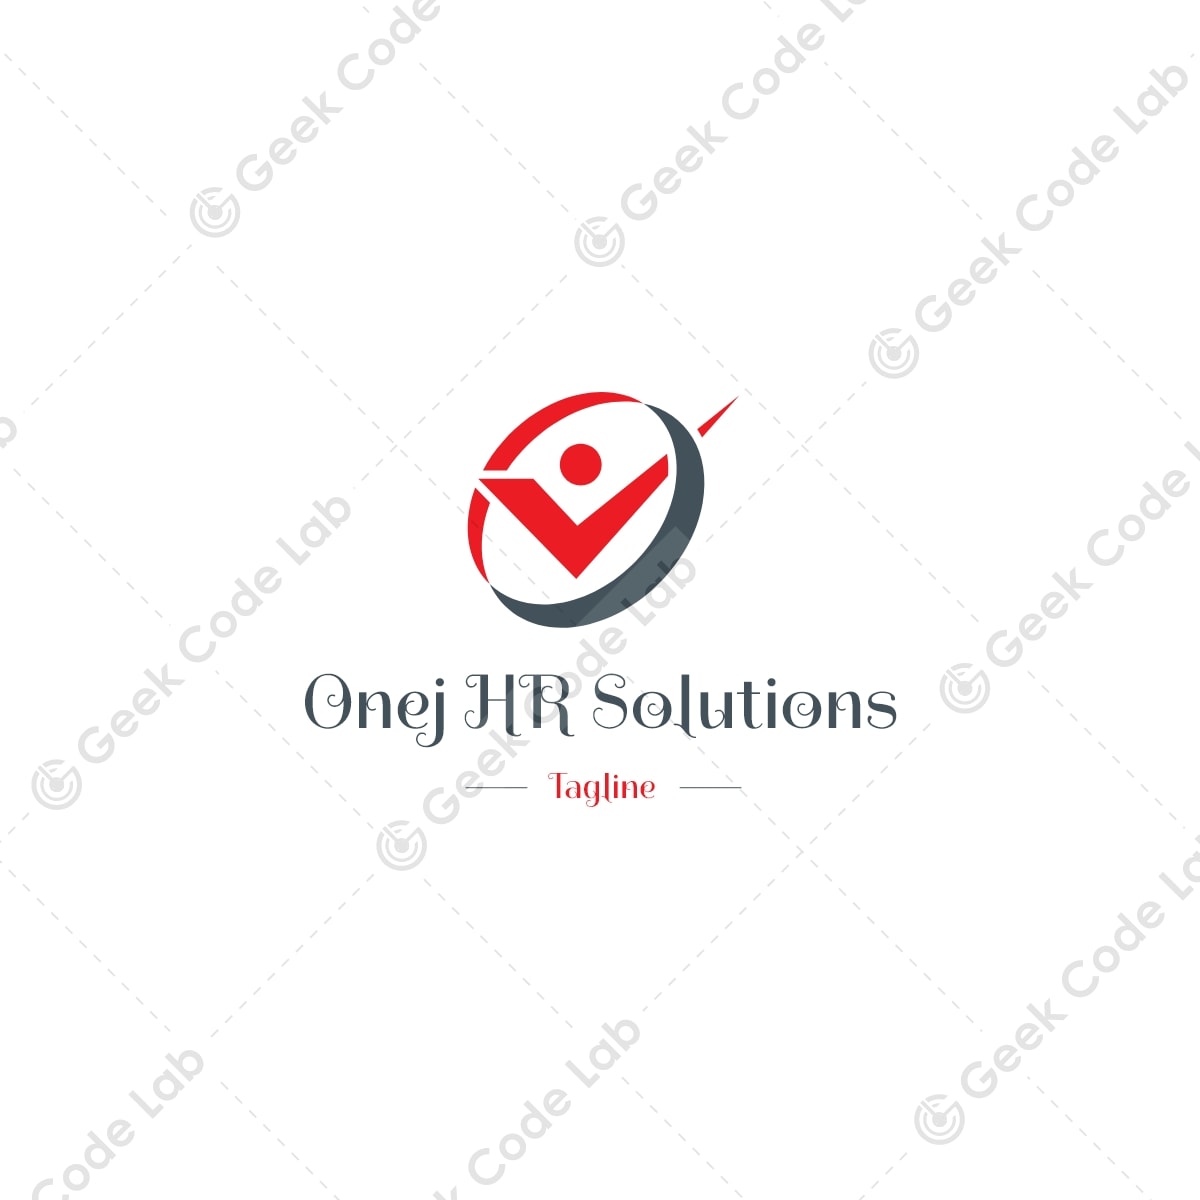 Onej HR Solutions